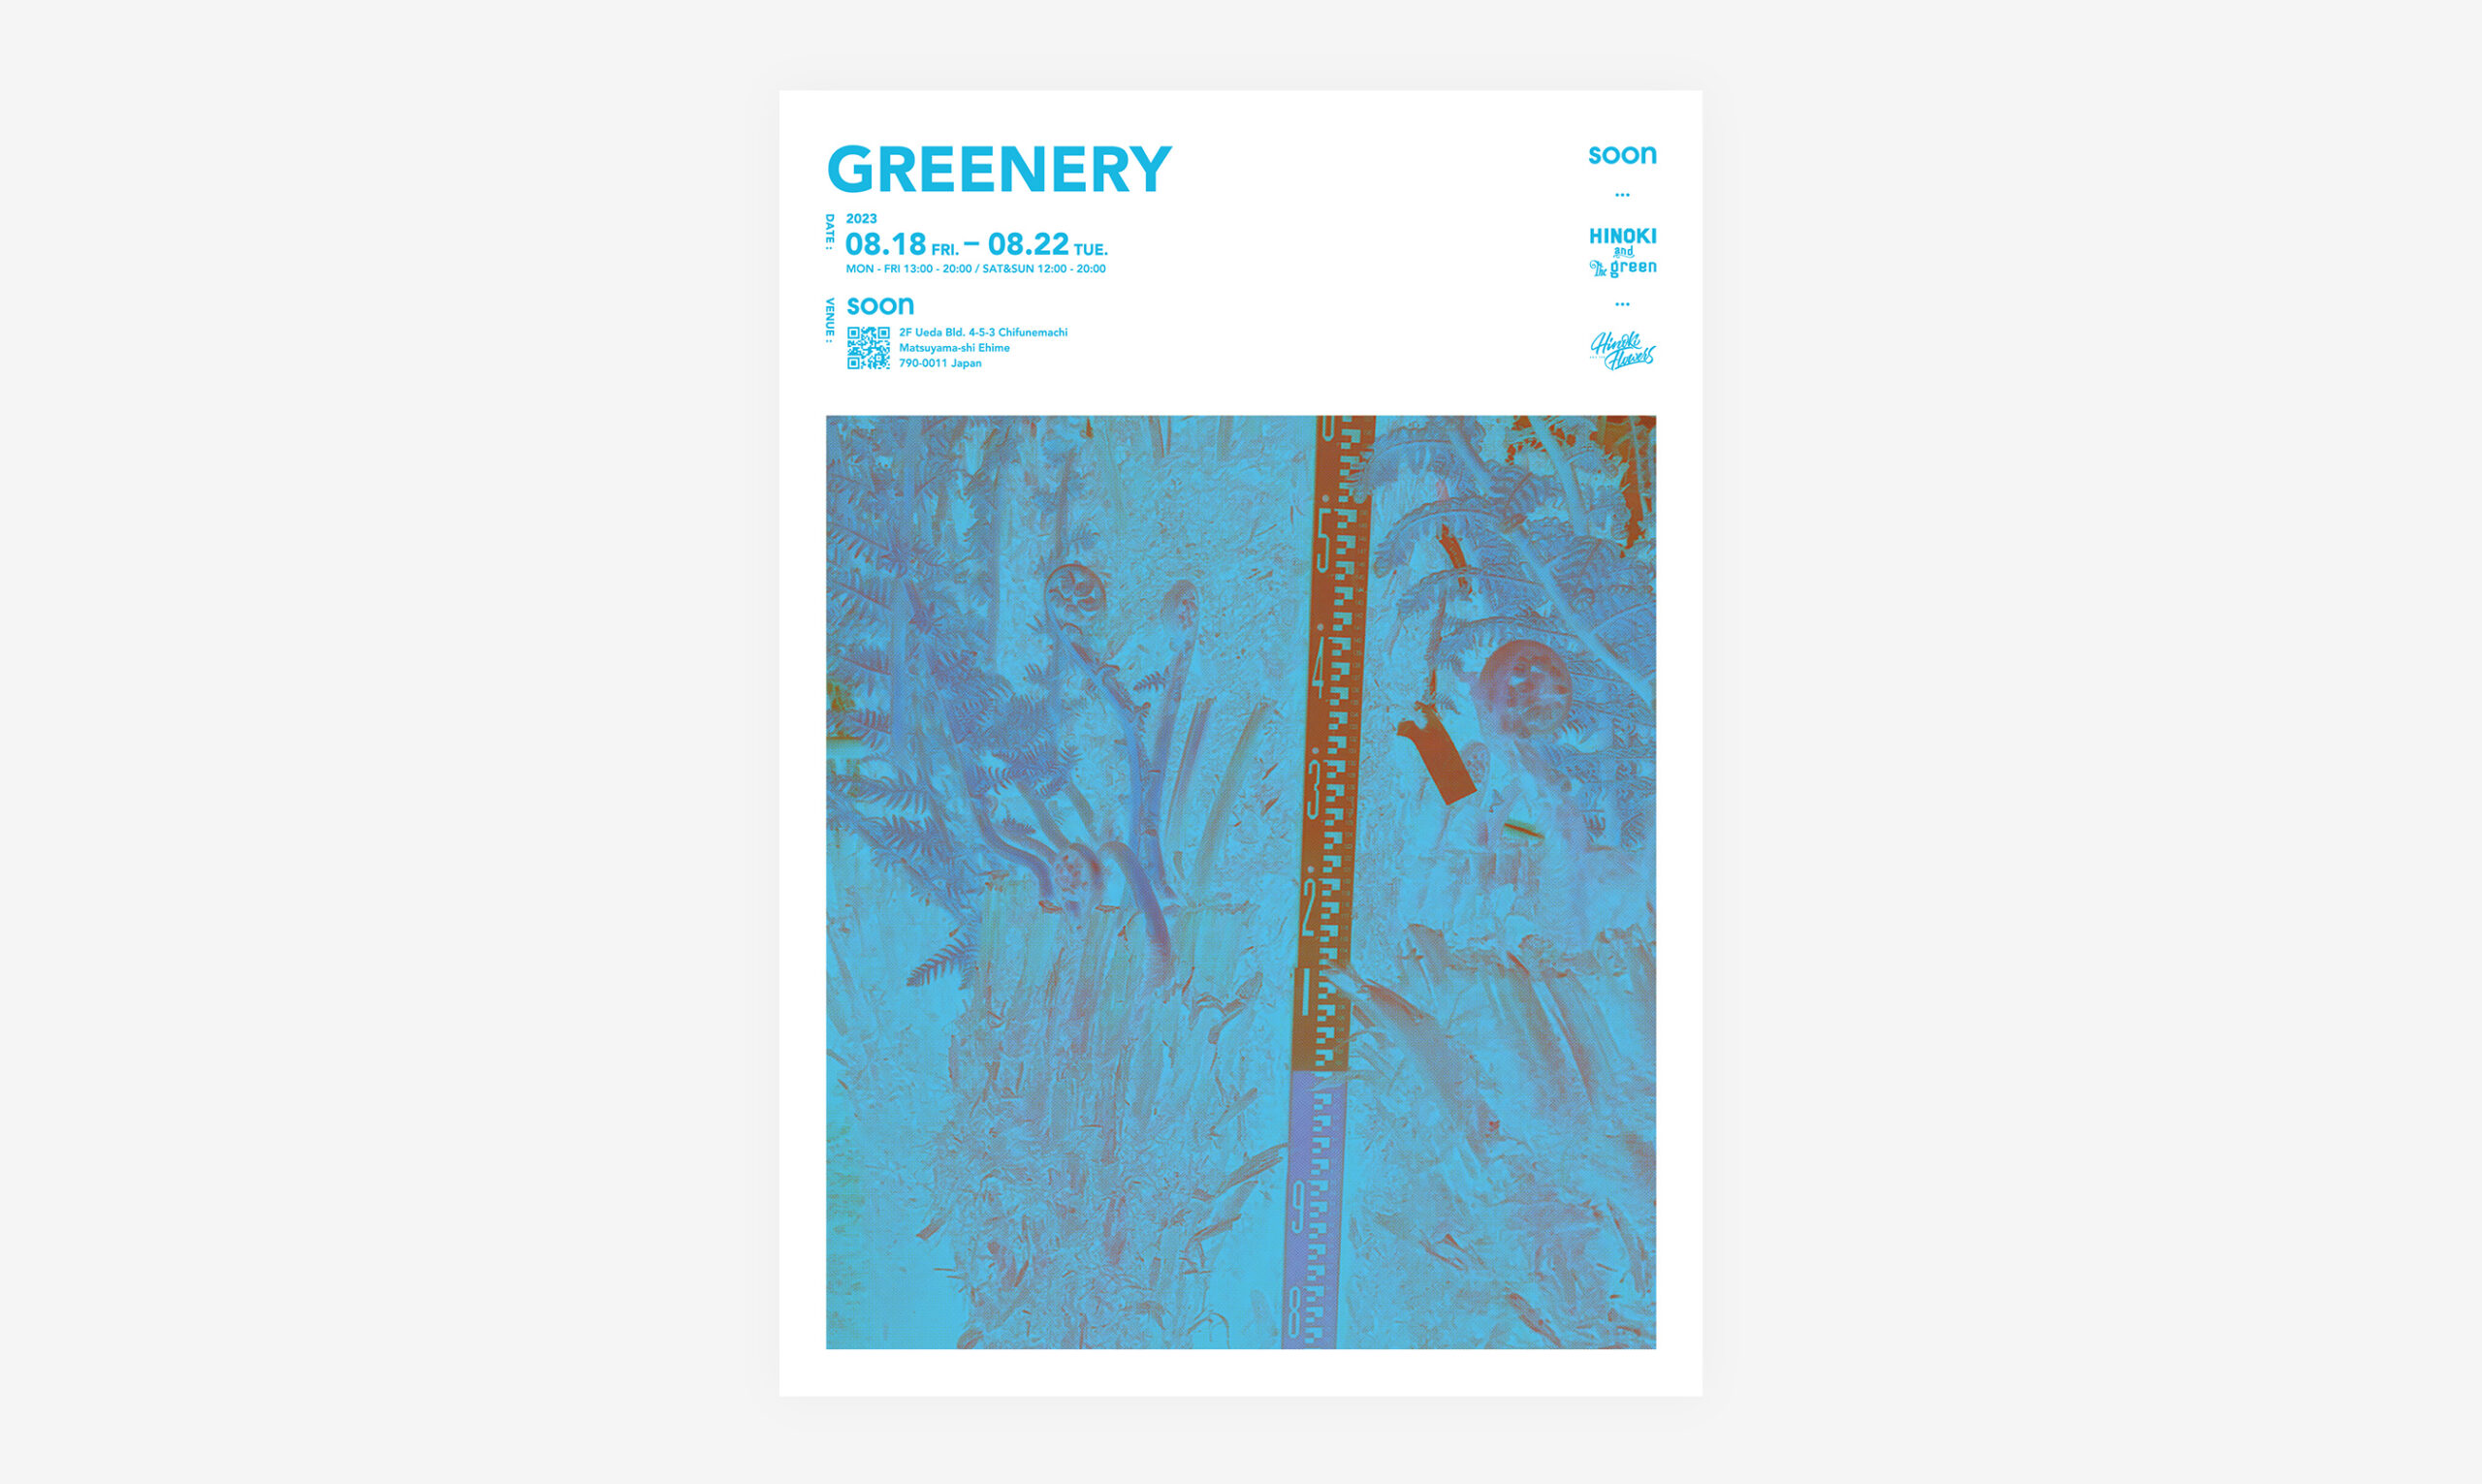 GREENERY #01 : GRAPHICS